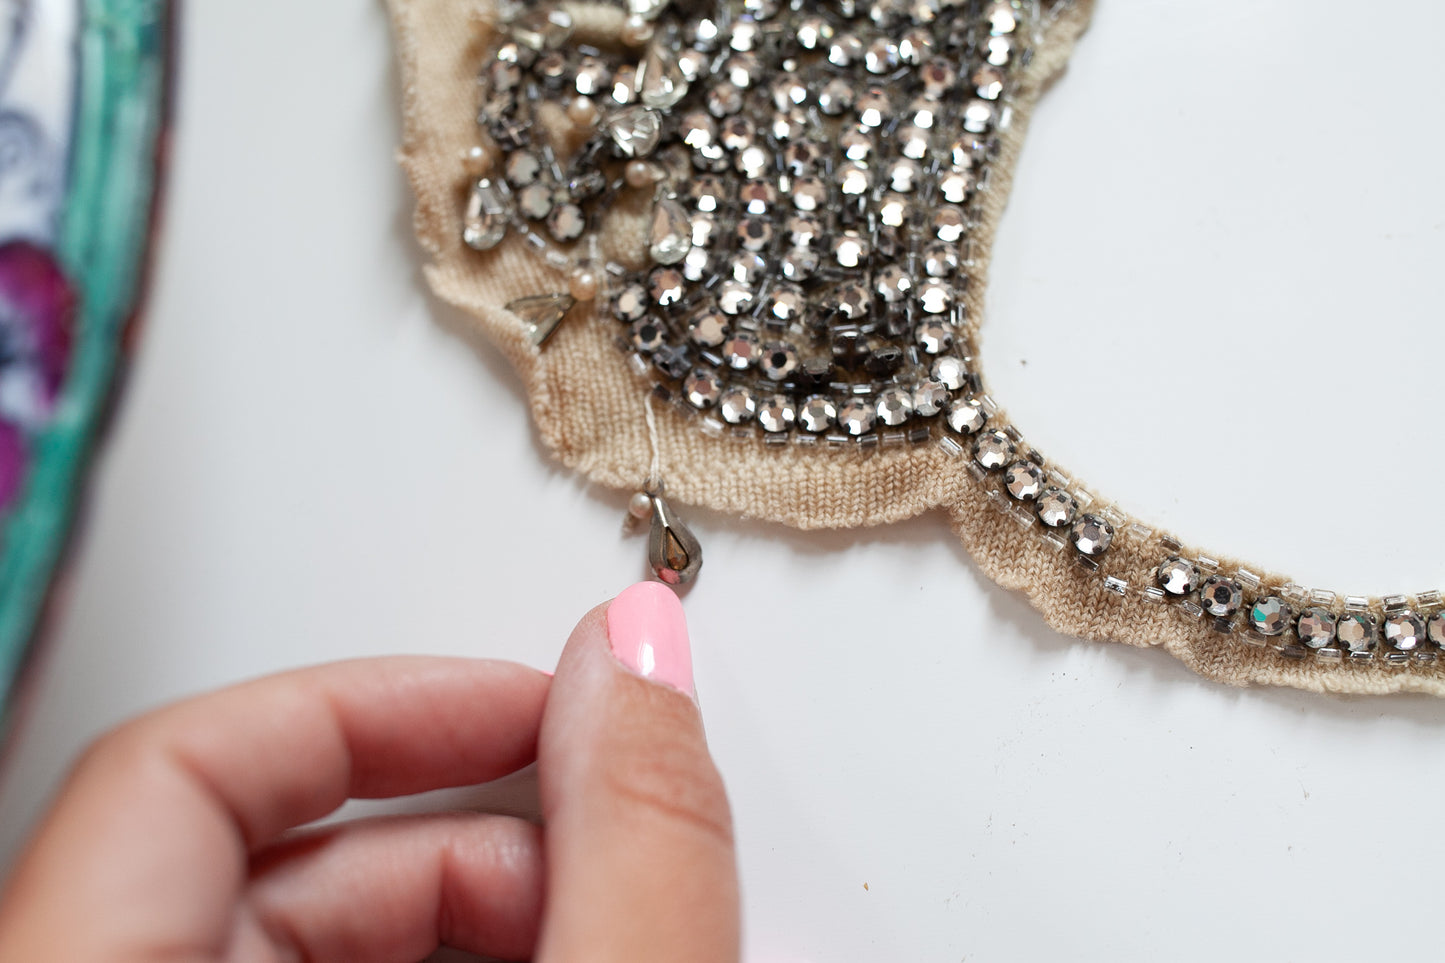 Vintage Beadwork - Collar Bead Work and Sequins